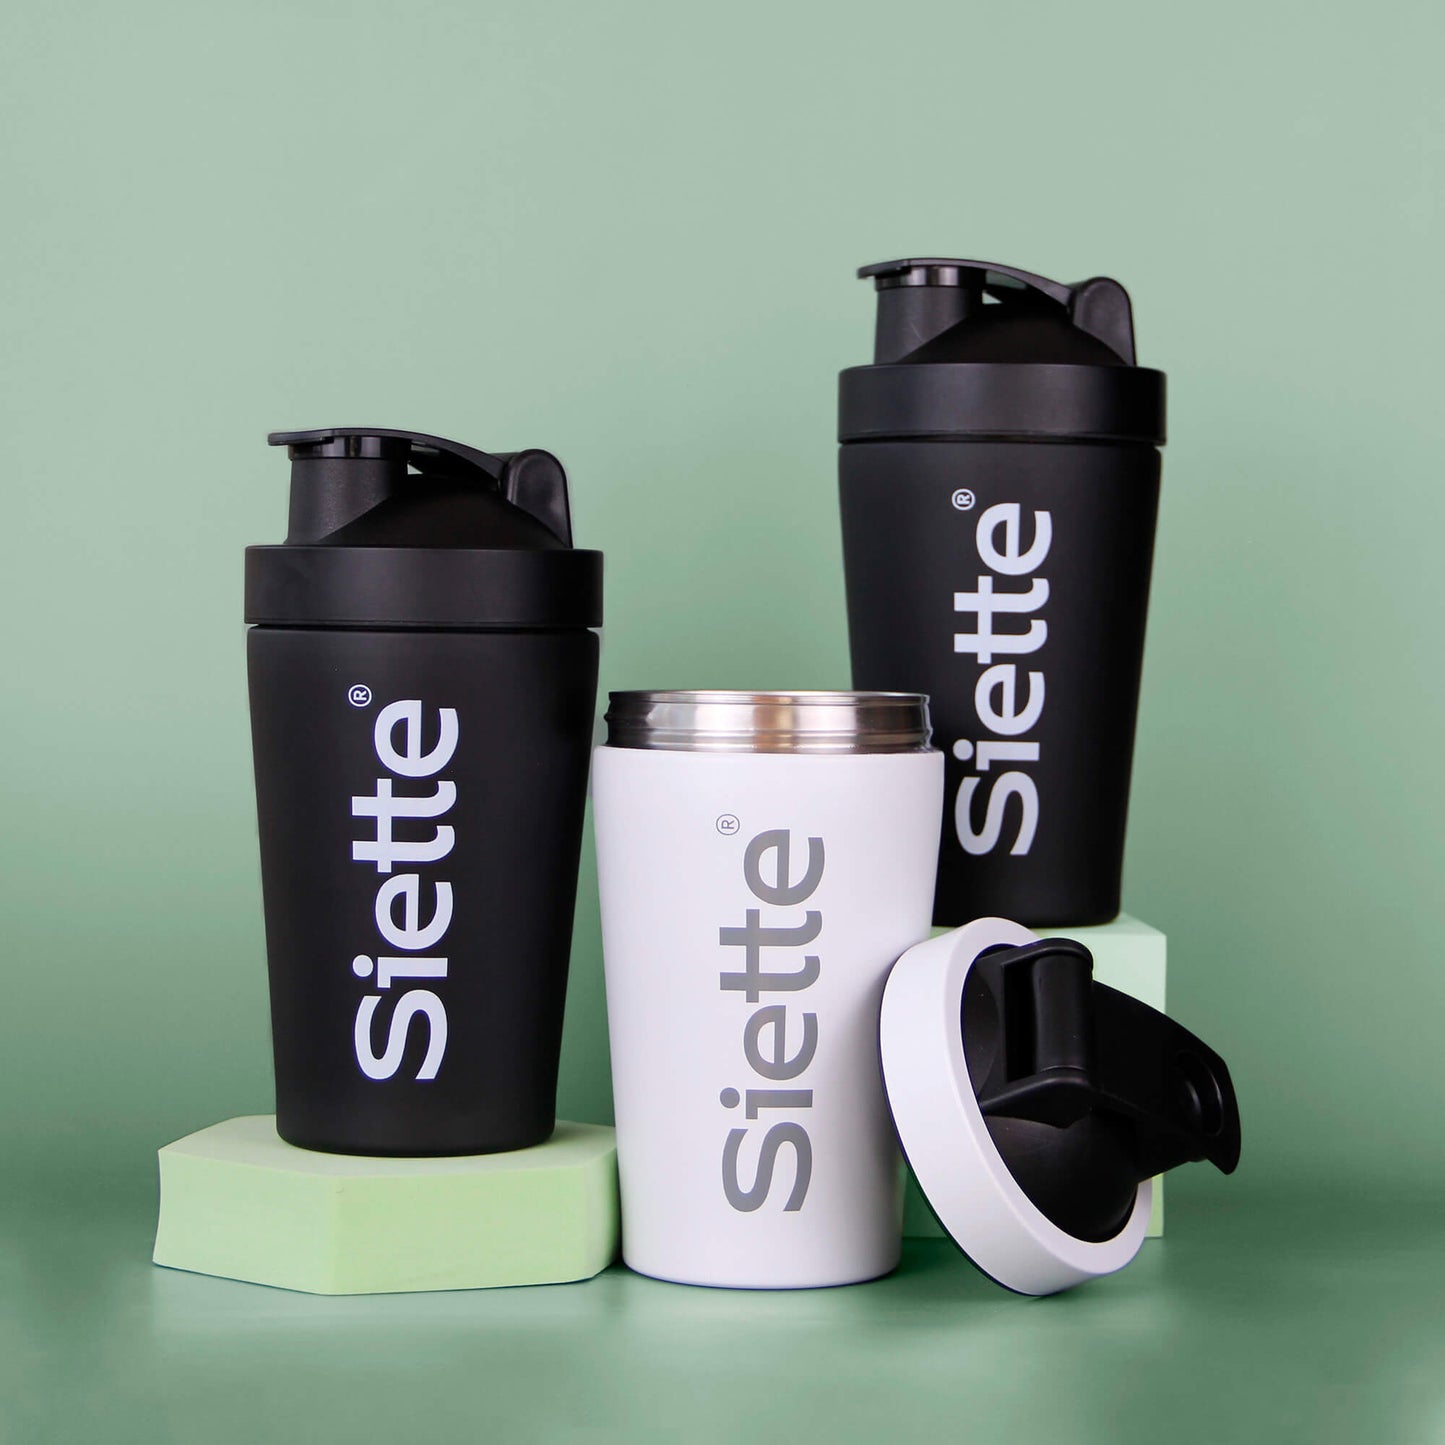 Shaker Siette 600ml | Shaker de acero inoxidable - Ideal para batidos de proteína